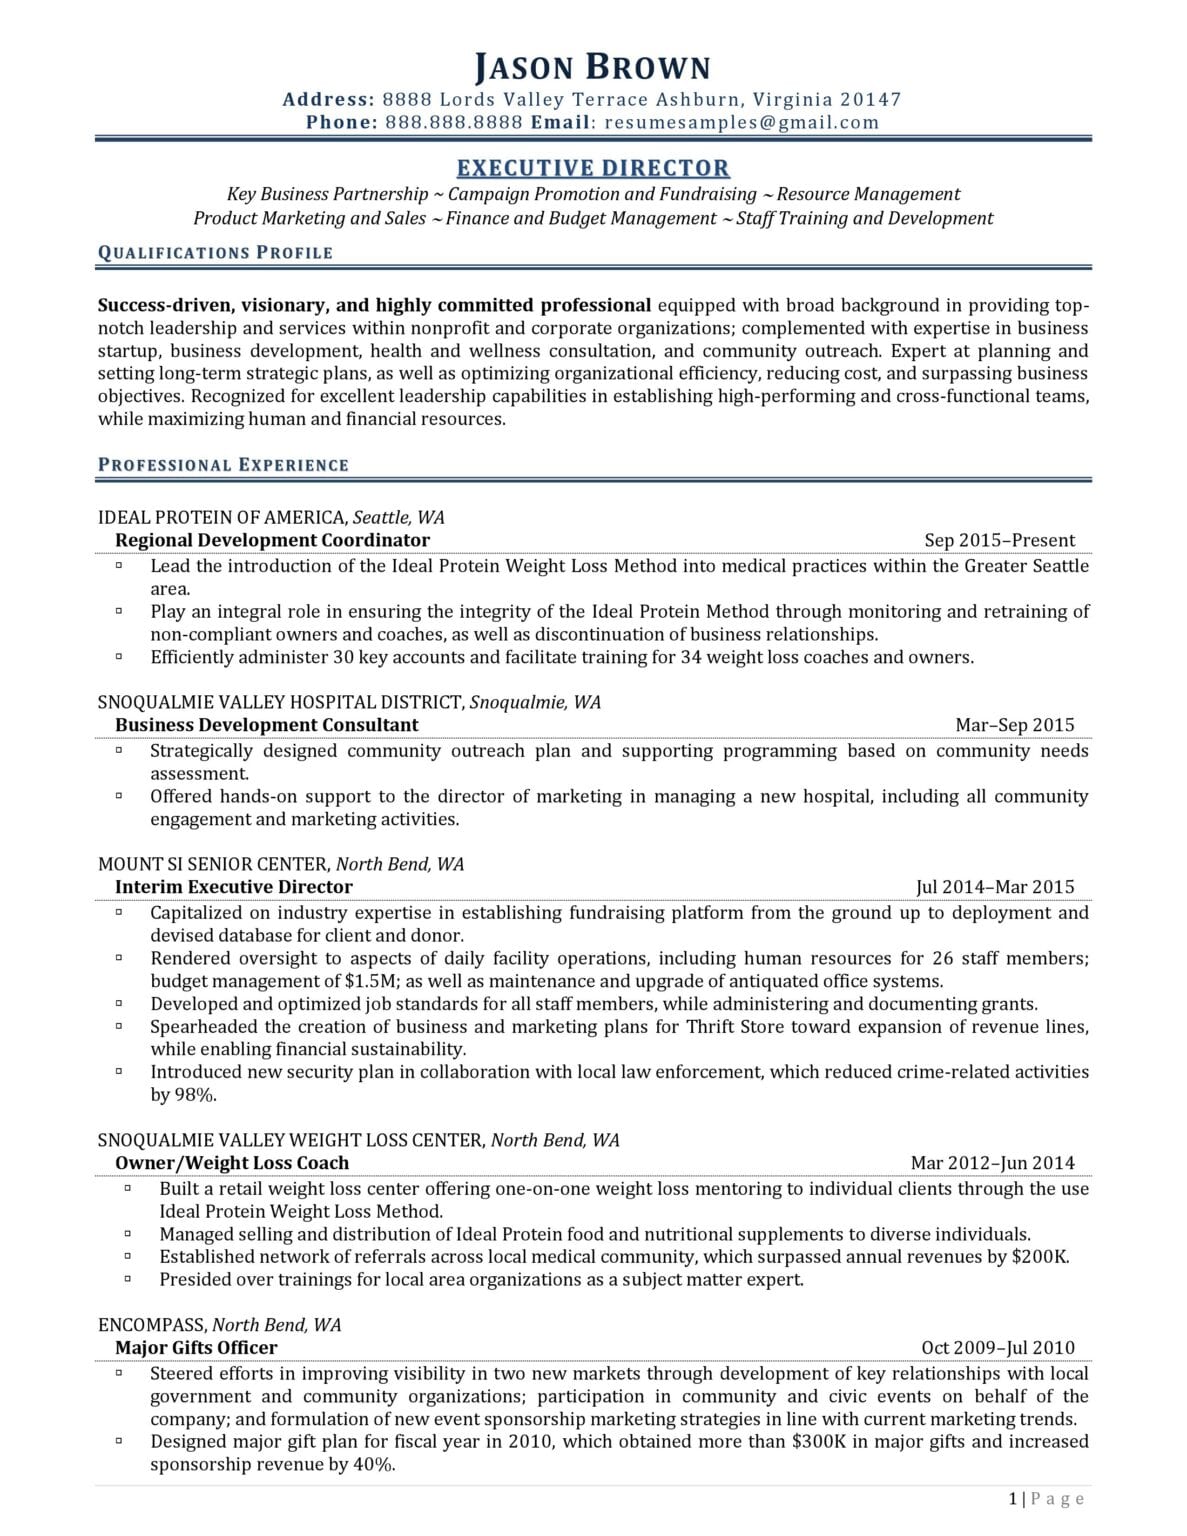 executive summary of resume example